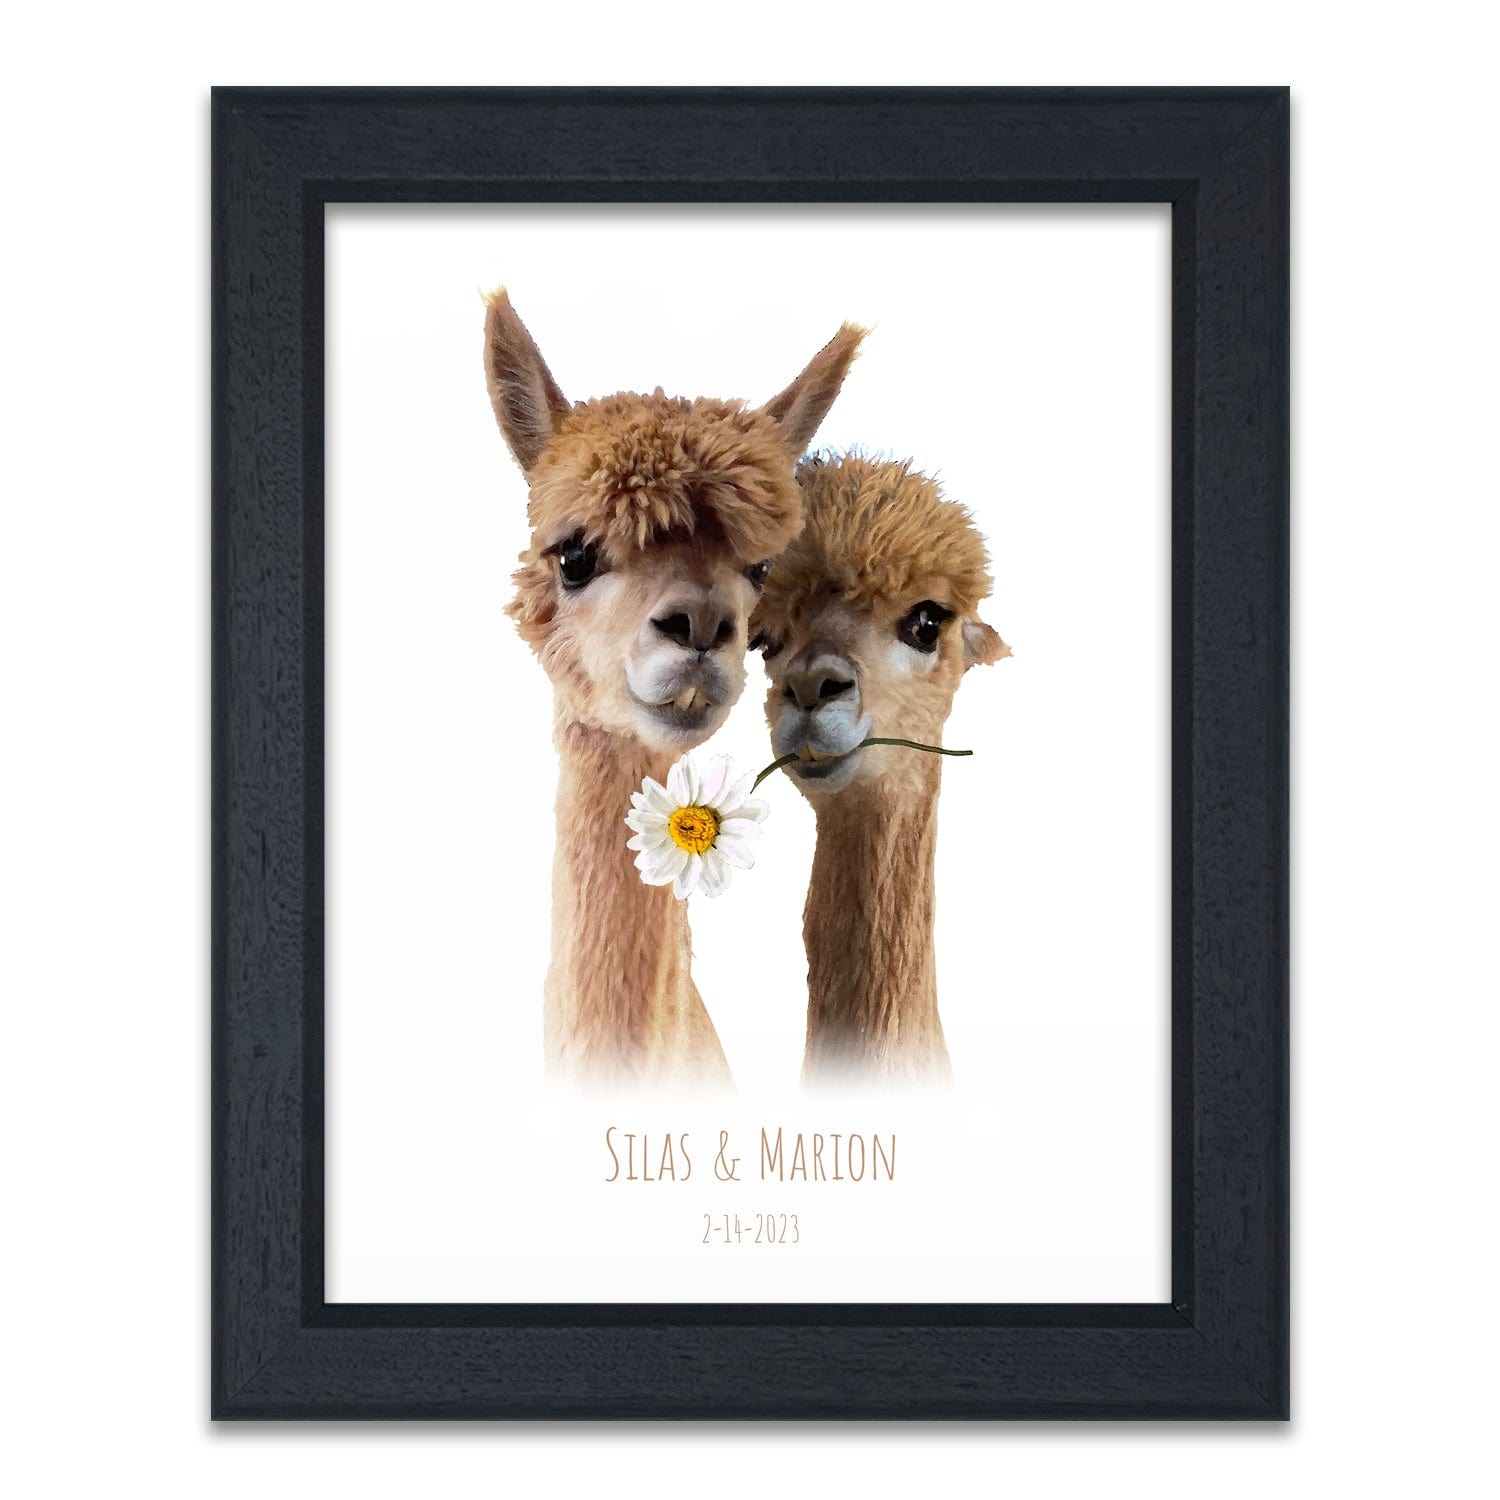 Llama gift - Happy Llamas personalized art from personal prints